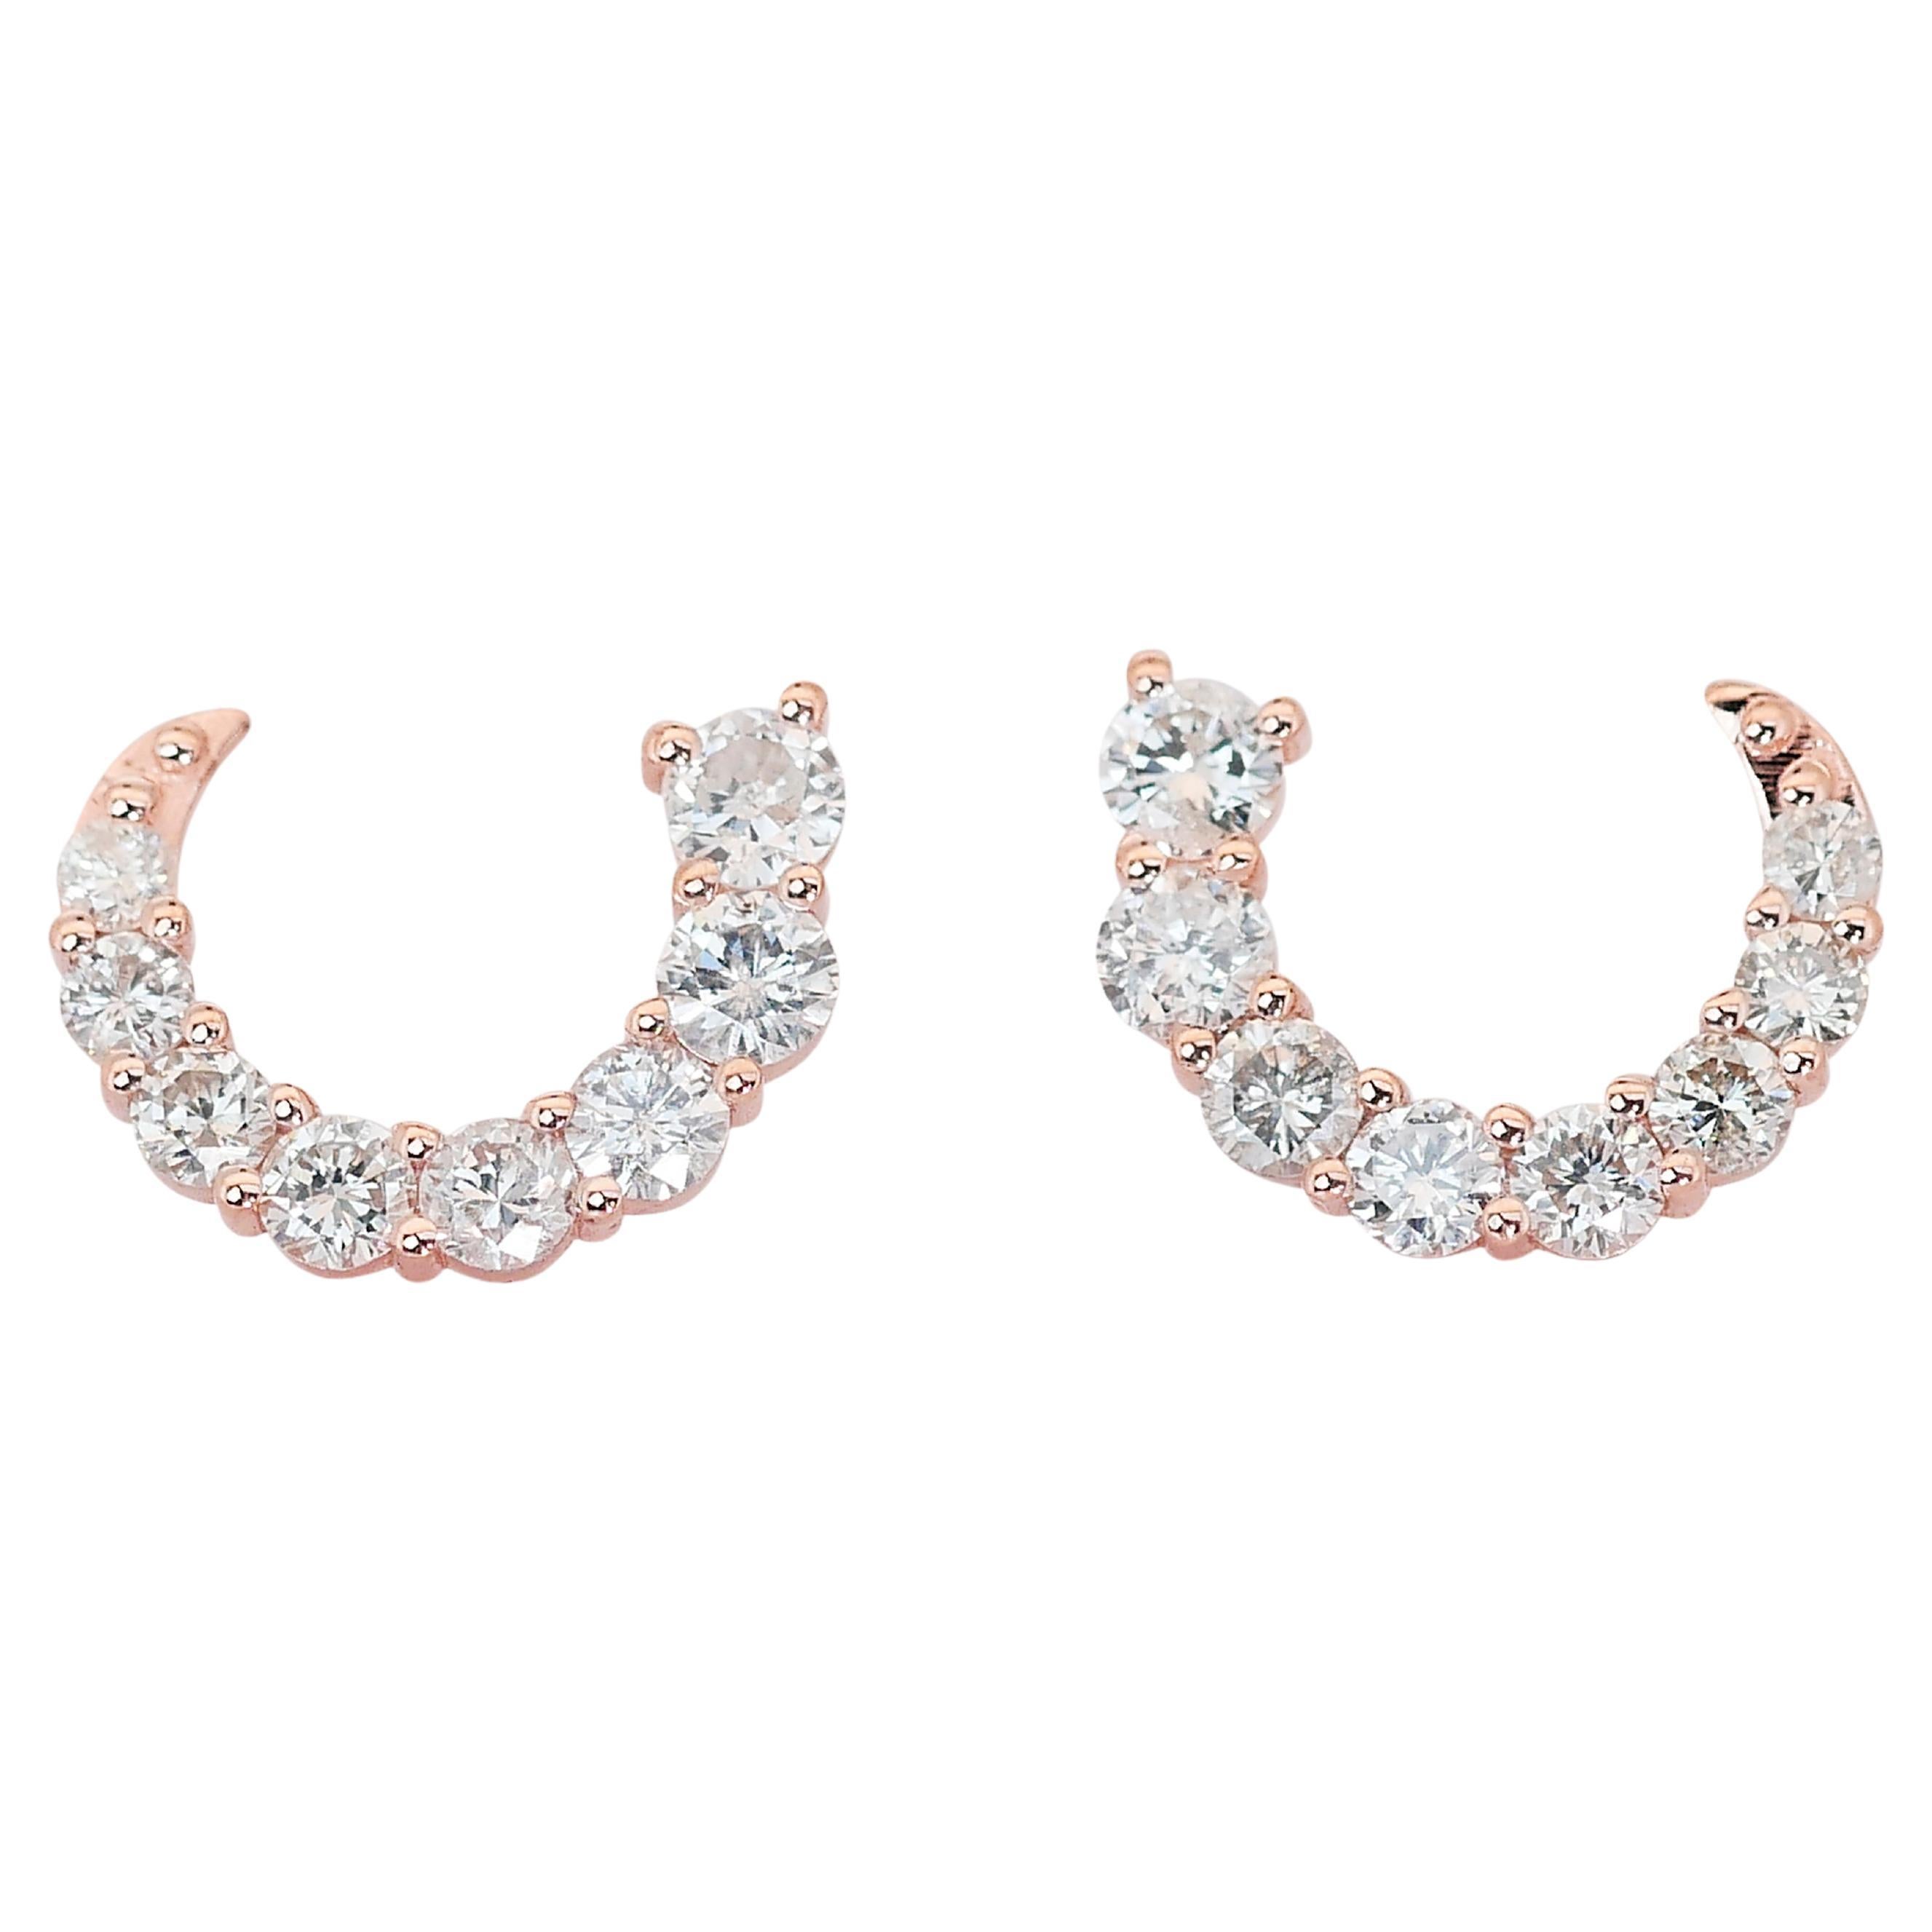 Fascinating 14k Rose Gold Natural Diamond Hoop Earrings w/1.85 ct -IGI Certified